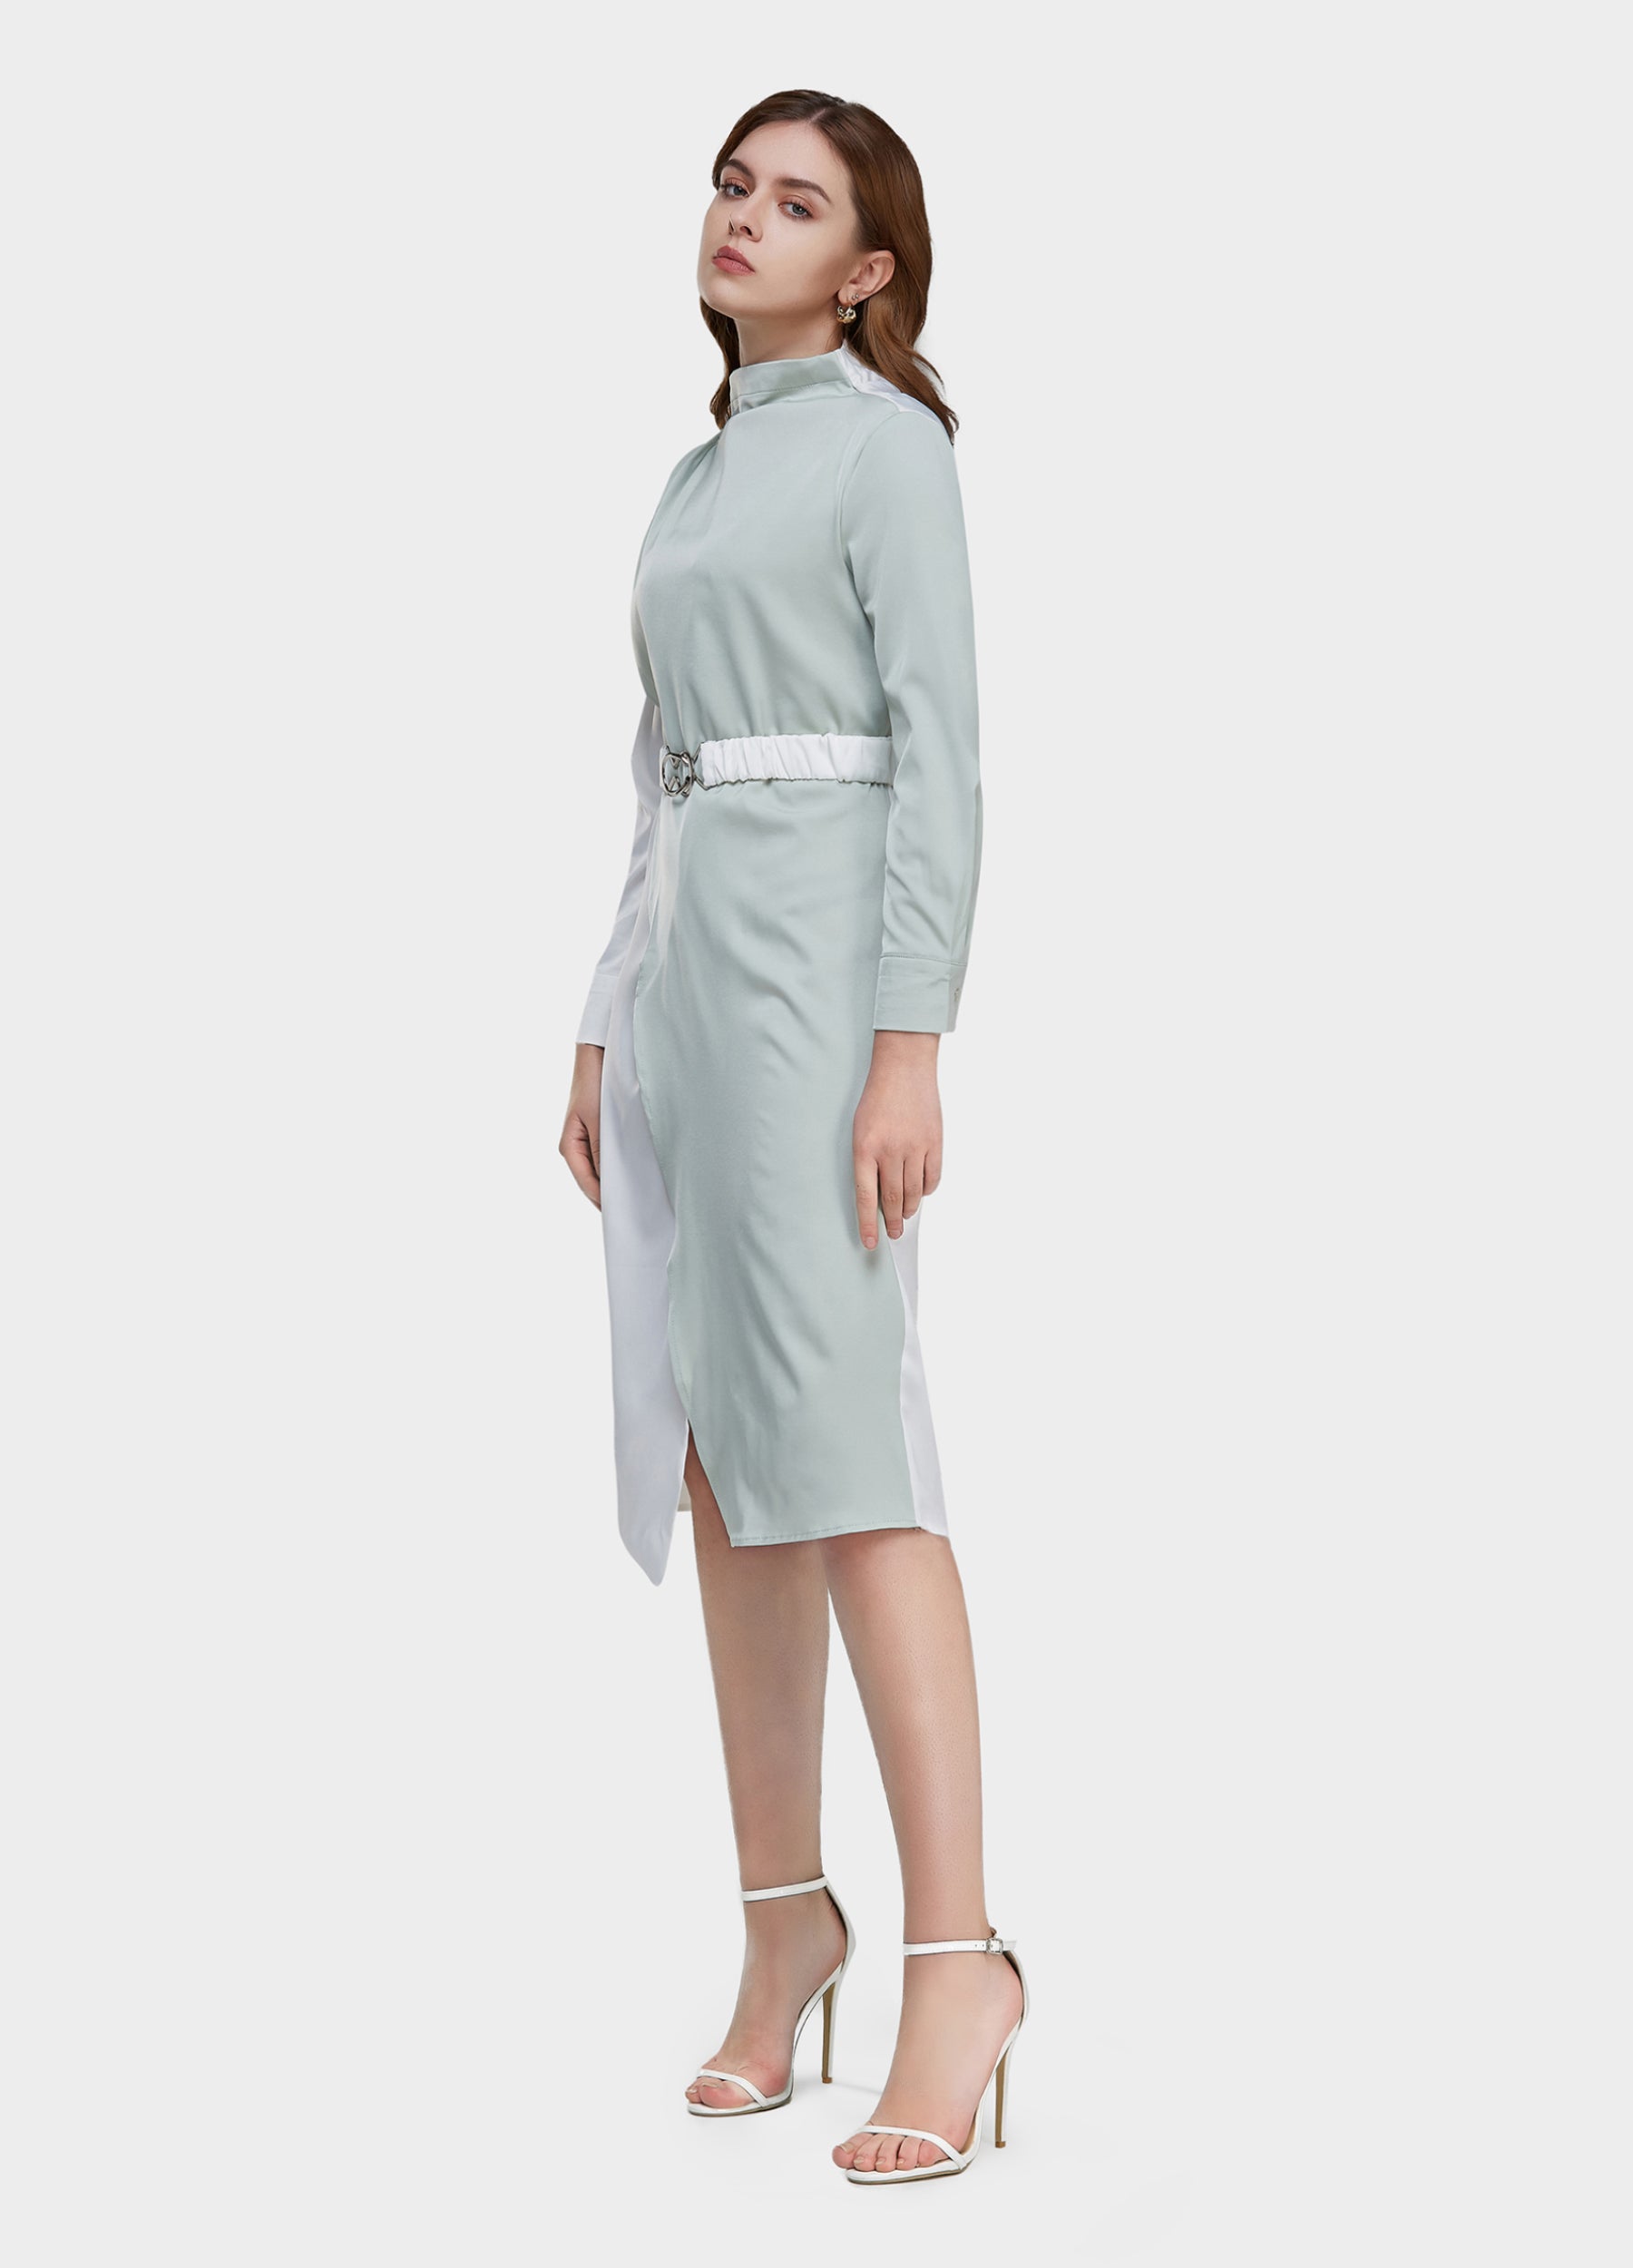 Women's Belted Colorblock High-Neck Long Sleeve Dress-Beige & Tiffany Blue side view